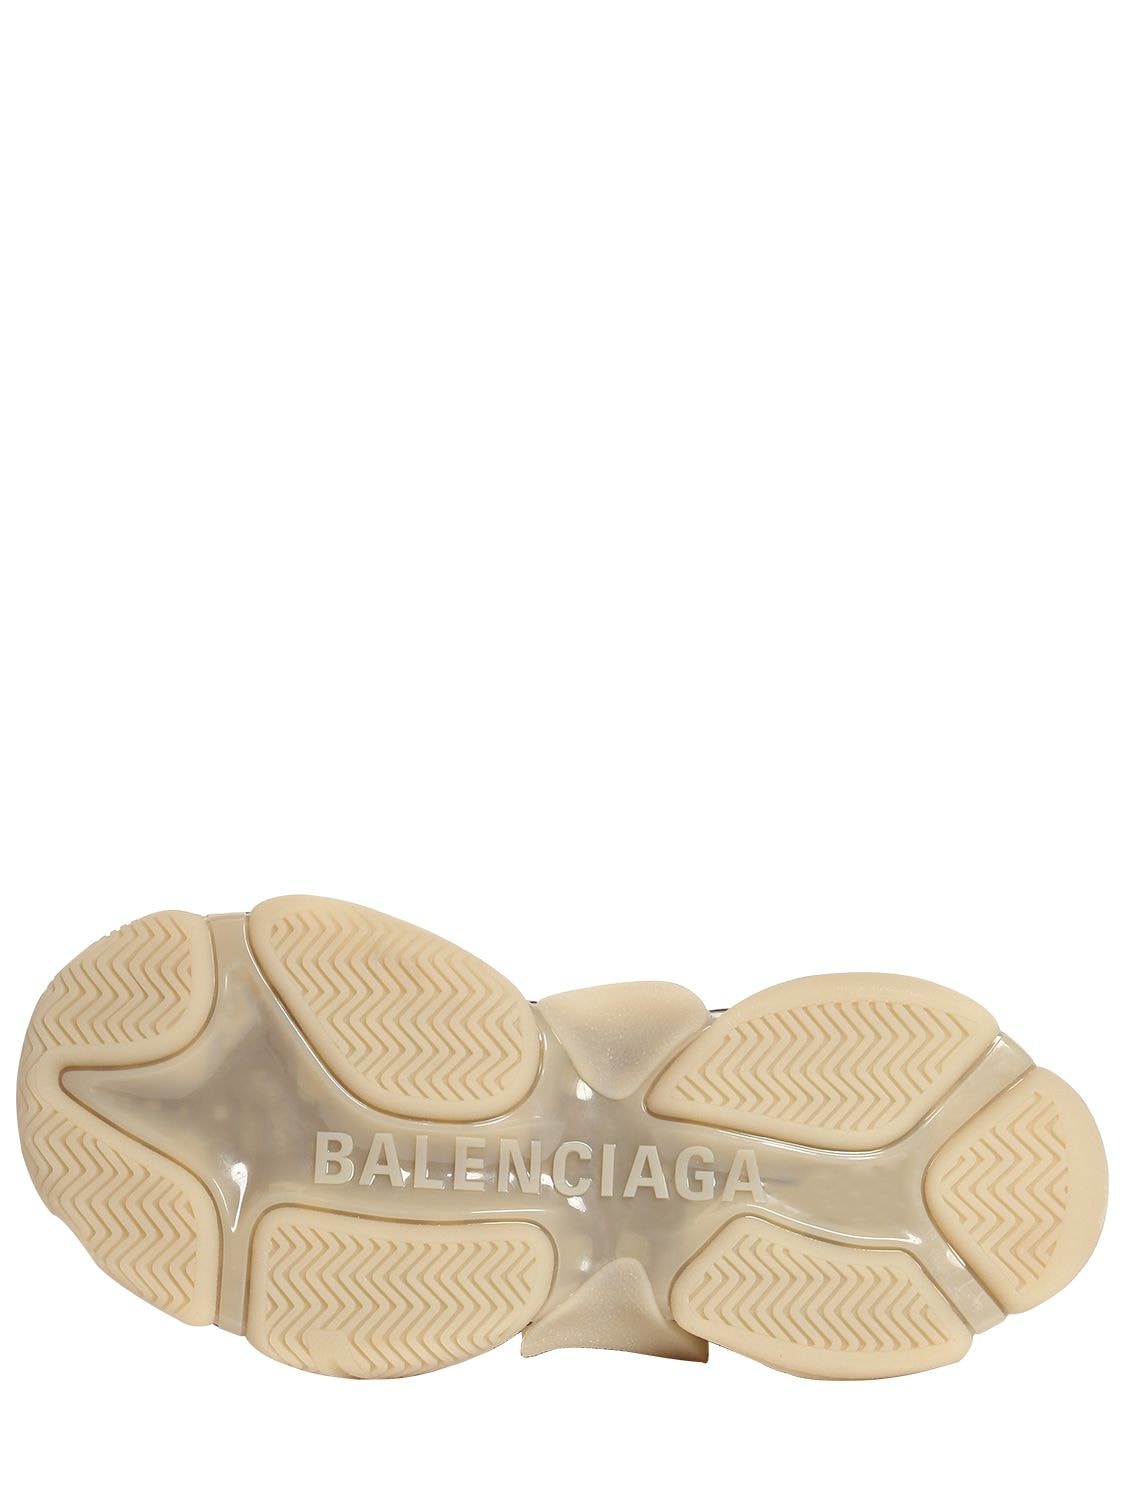 Shop Balenciaga 60mm Triple S Clear Sole Sneakers In Nude